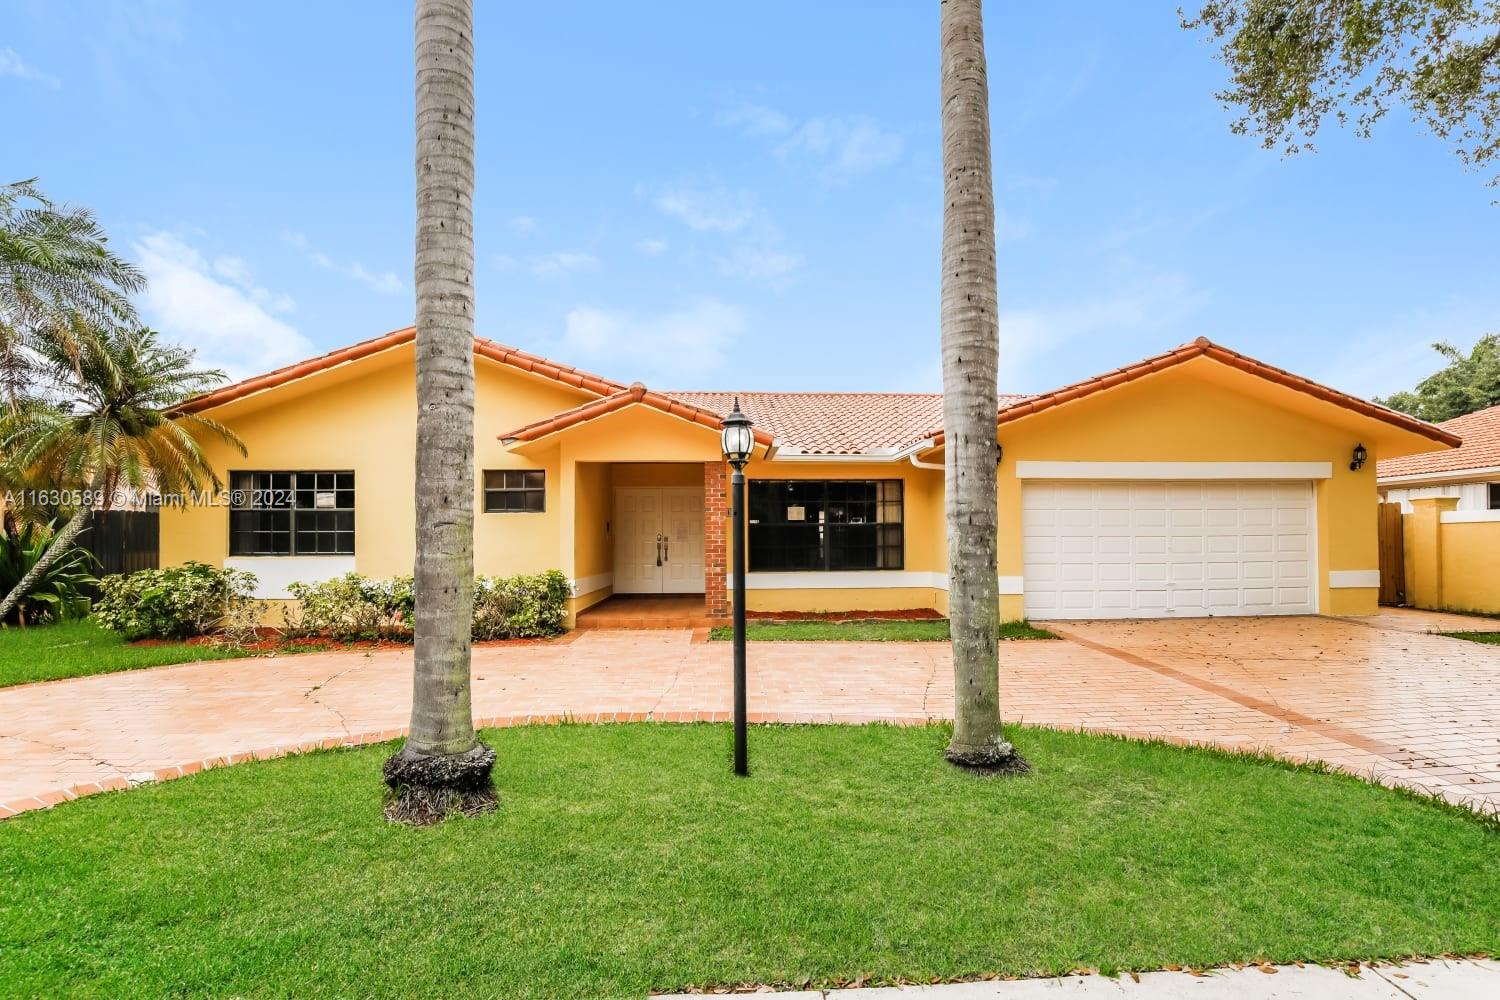 Rental Property at 16630 Nw 82nd Ave, Miami Lakes, Miami-Dade County, Florida - Bedrooms: 3 
Bathrooms: 2  - $3,620 MO.